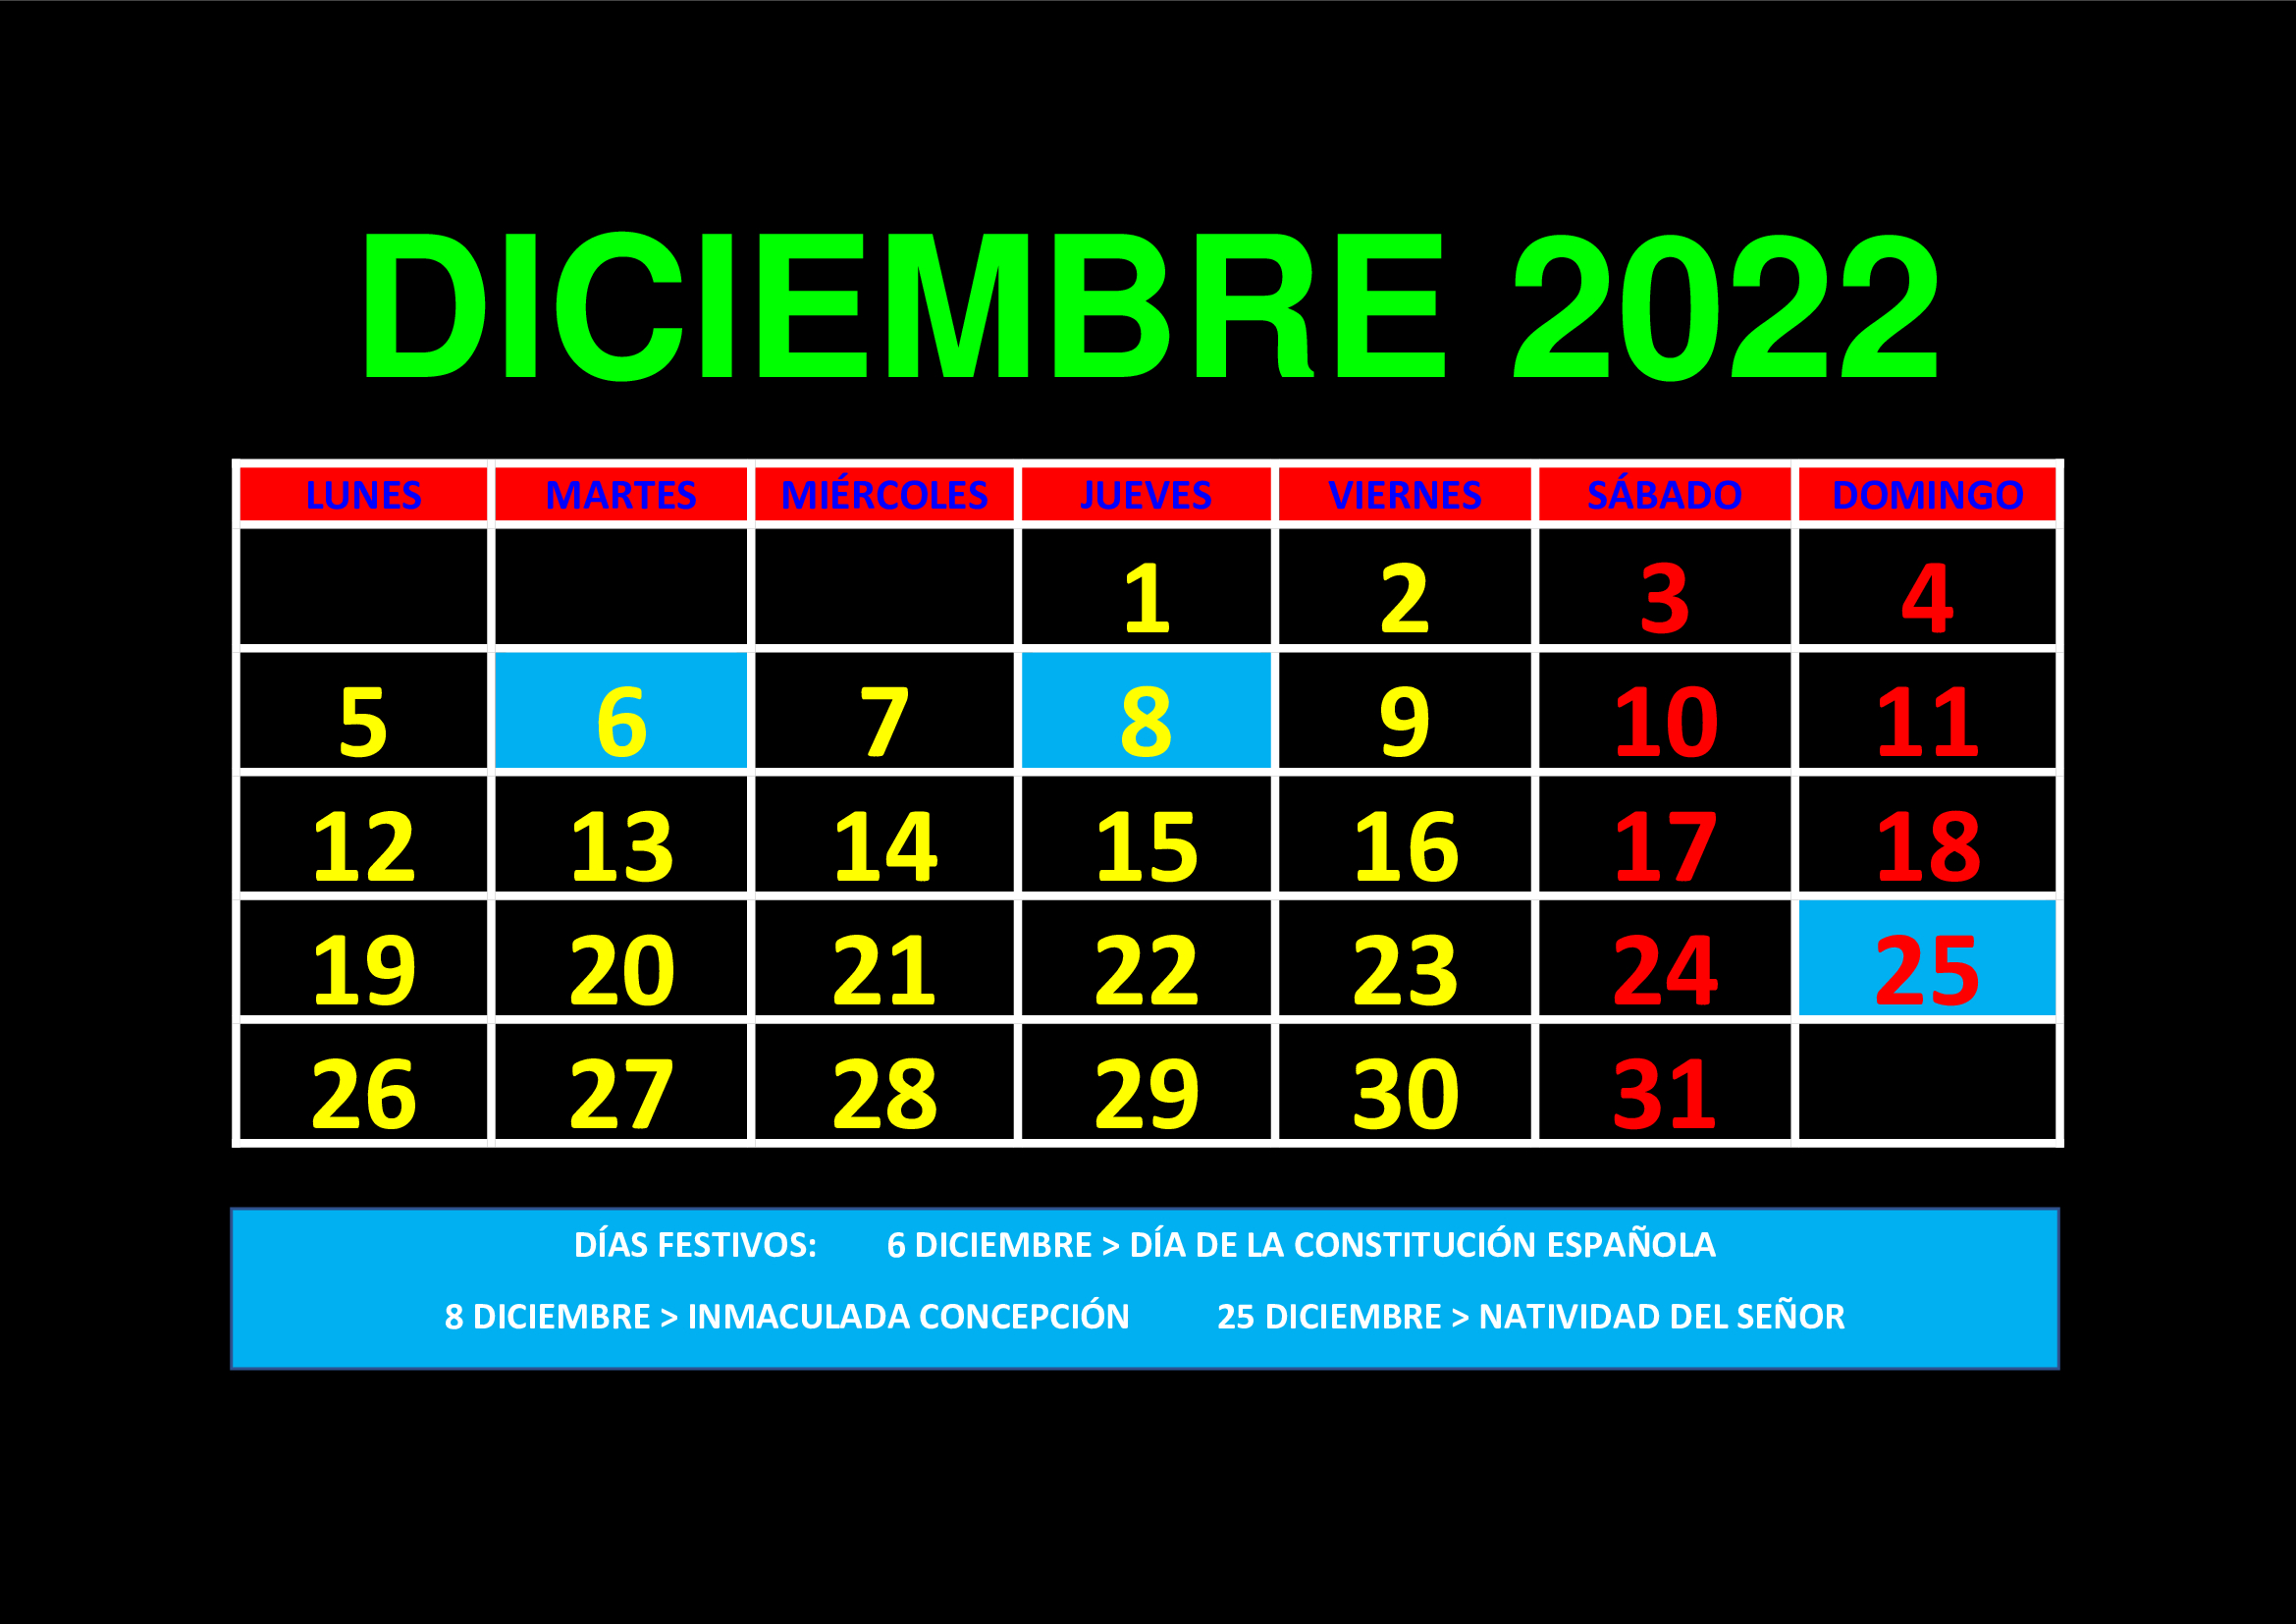 La imagen muestra el mes de diciembre de 2022